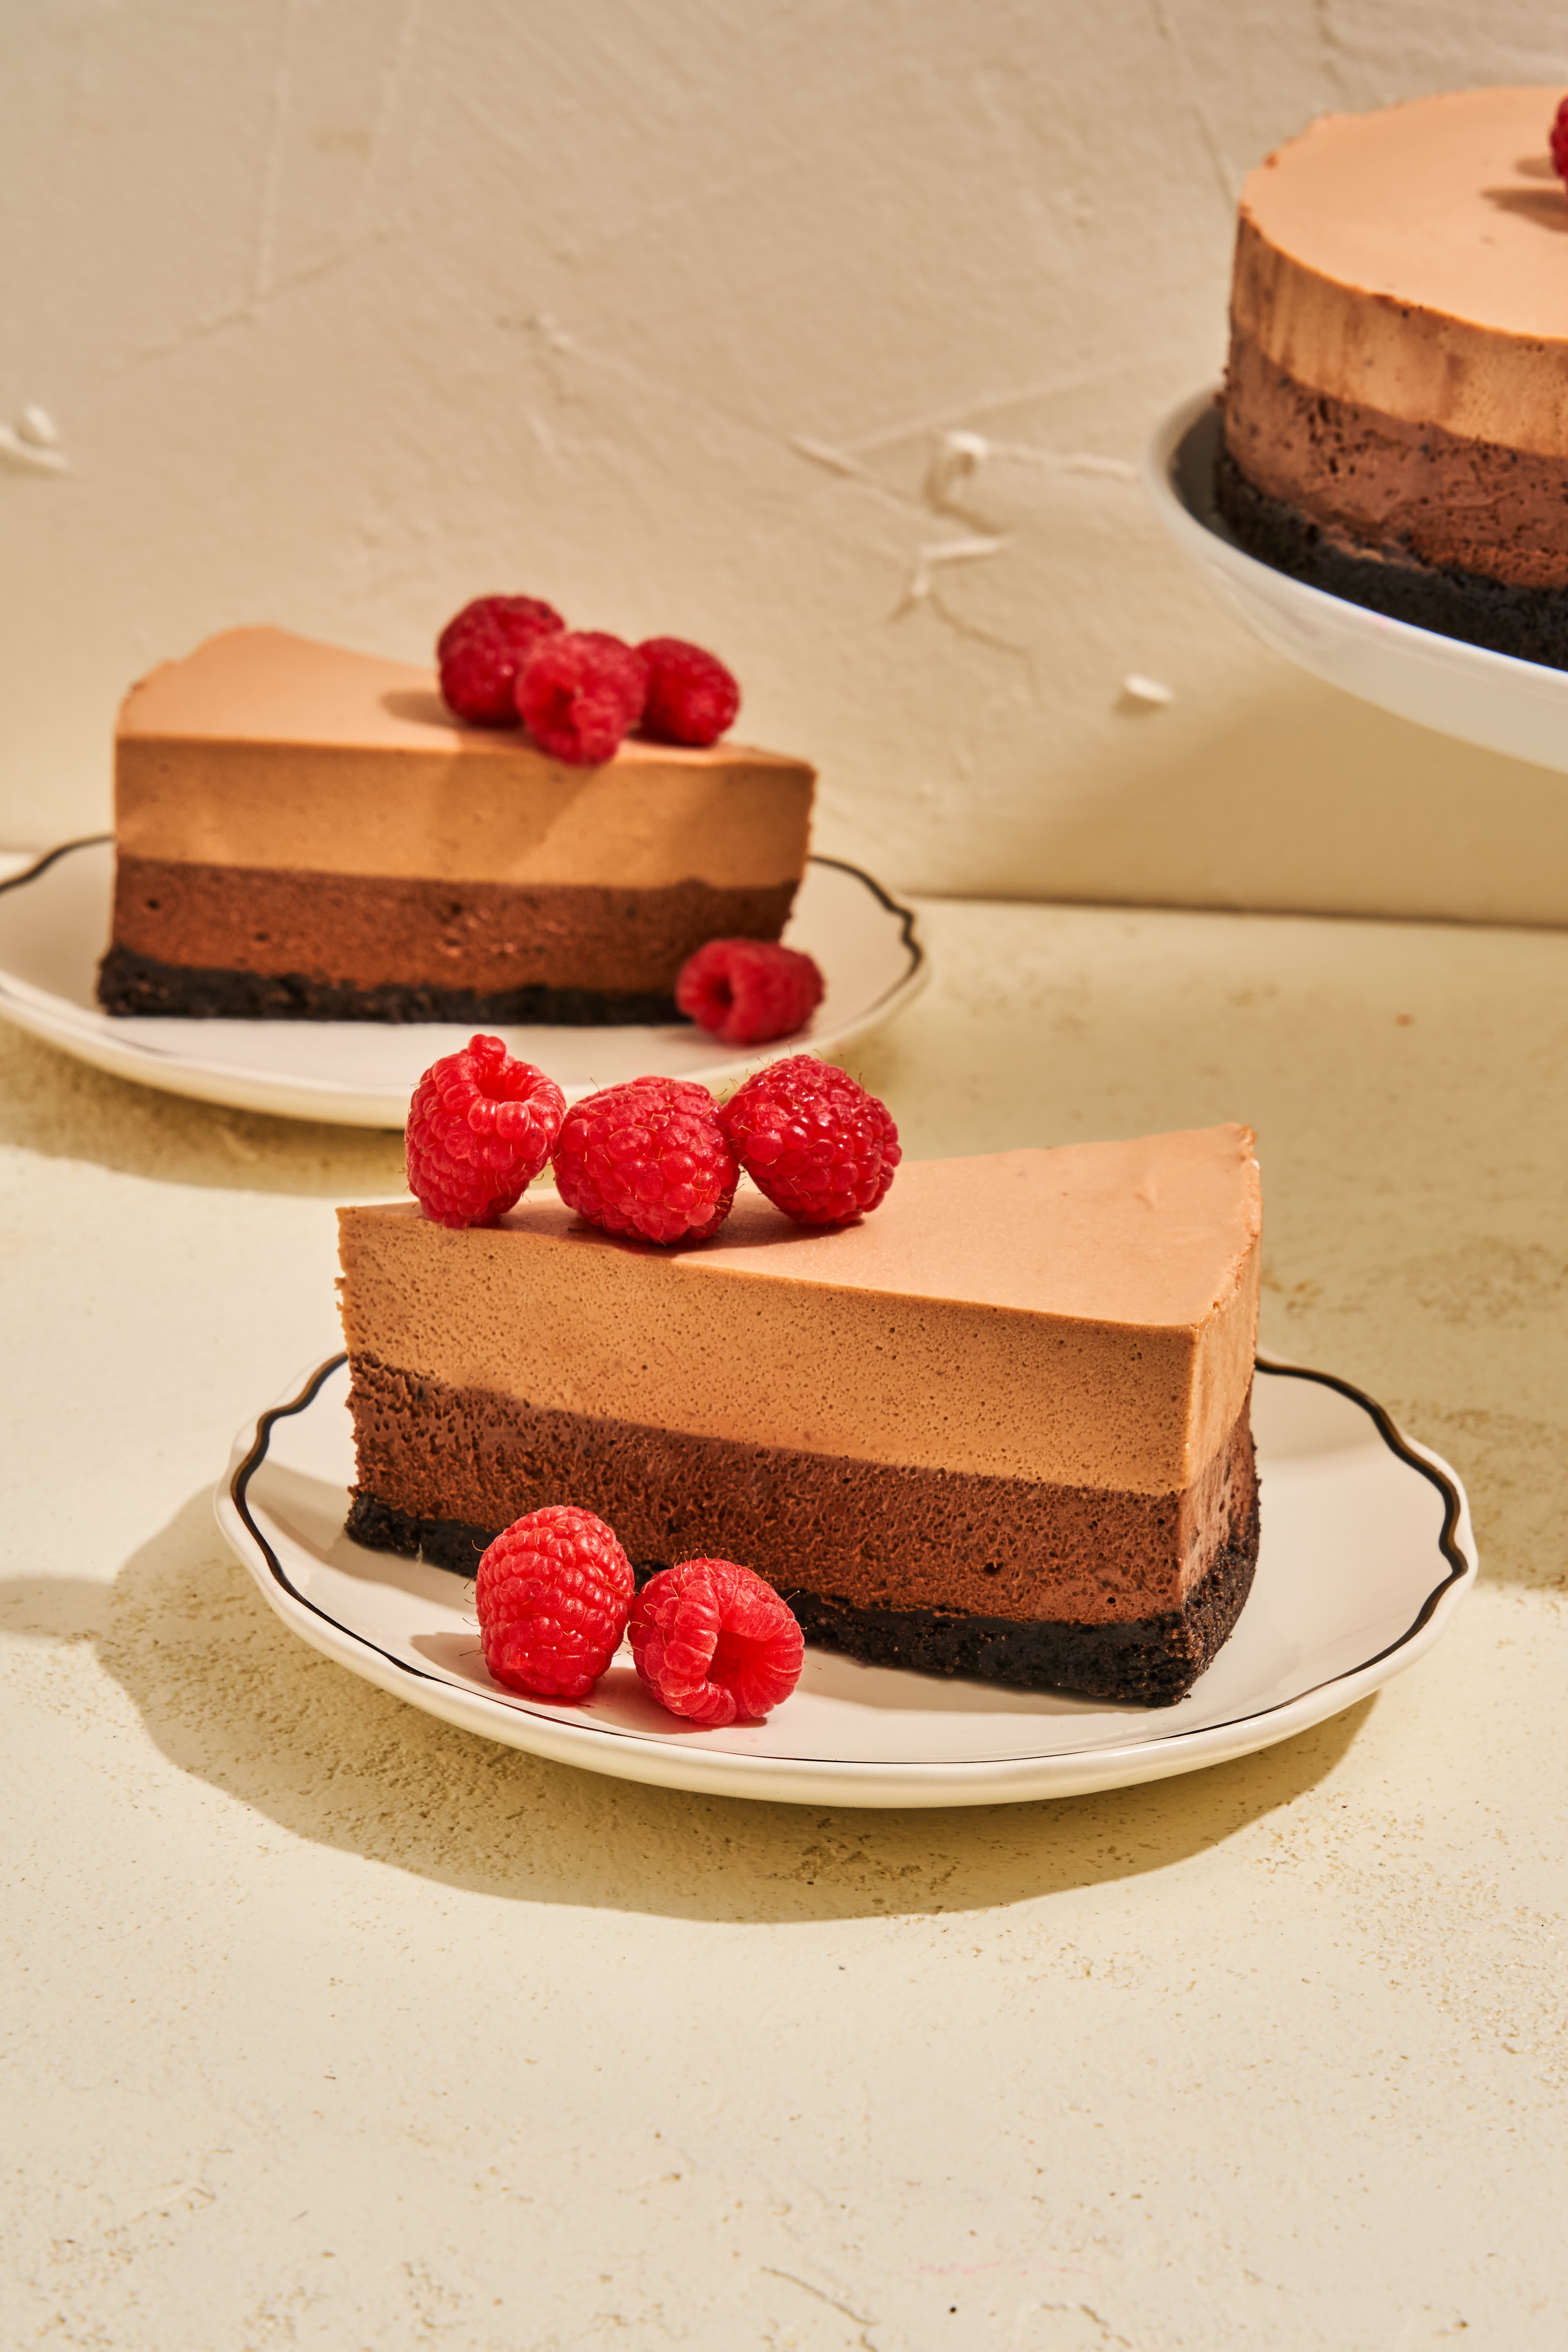 Chocolate Mousse Cake - No-bake dessert recipes - Wobbly Mousse Cake